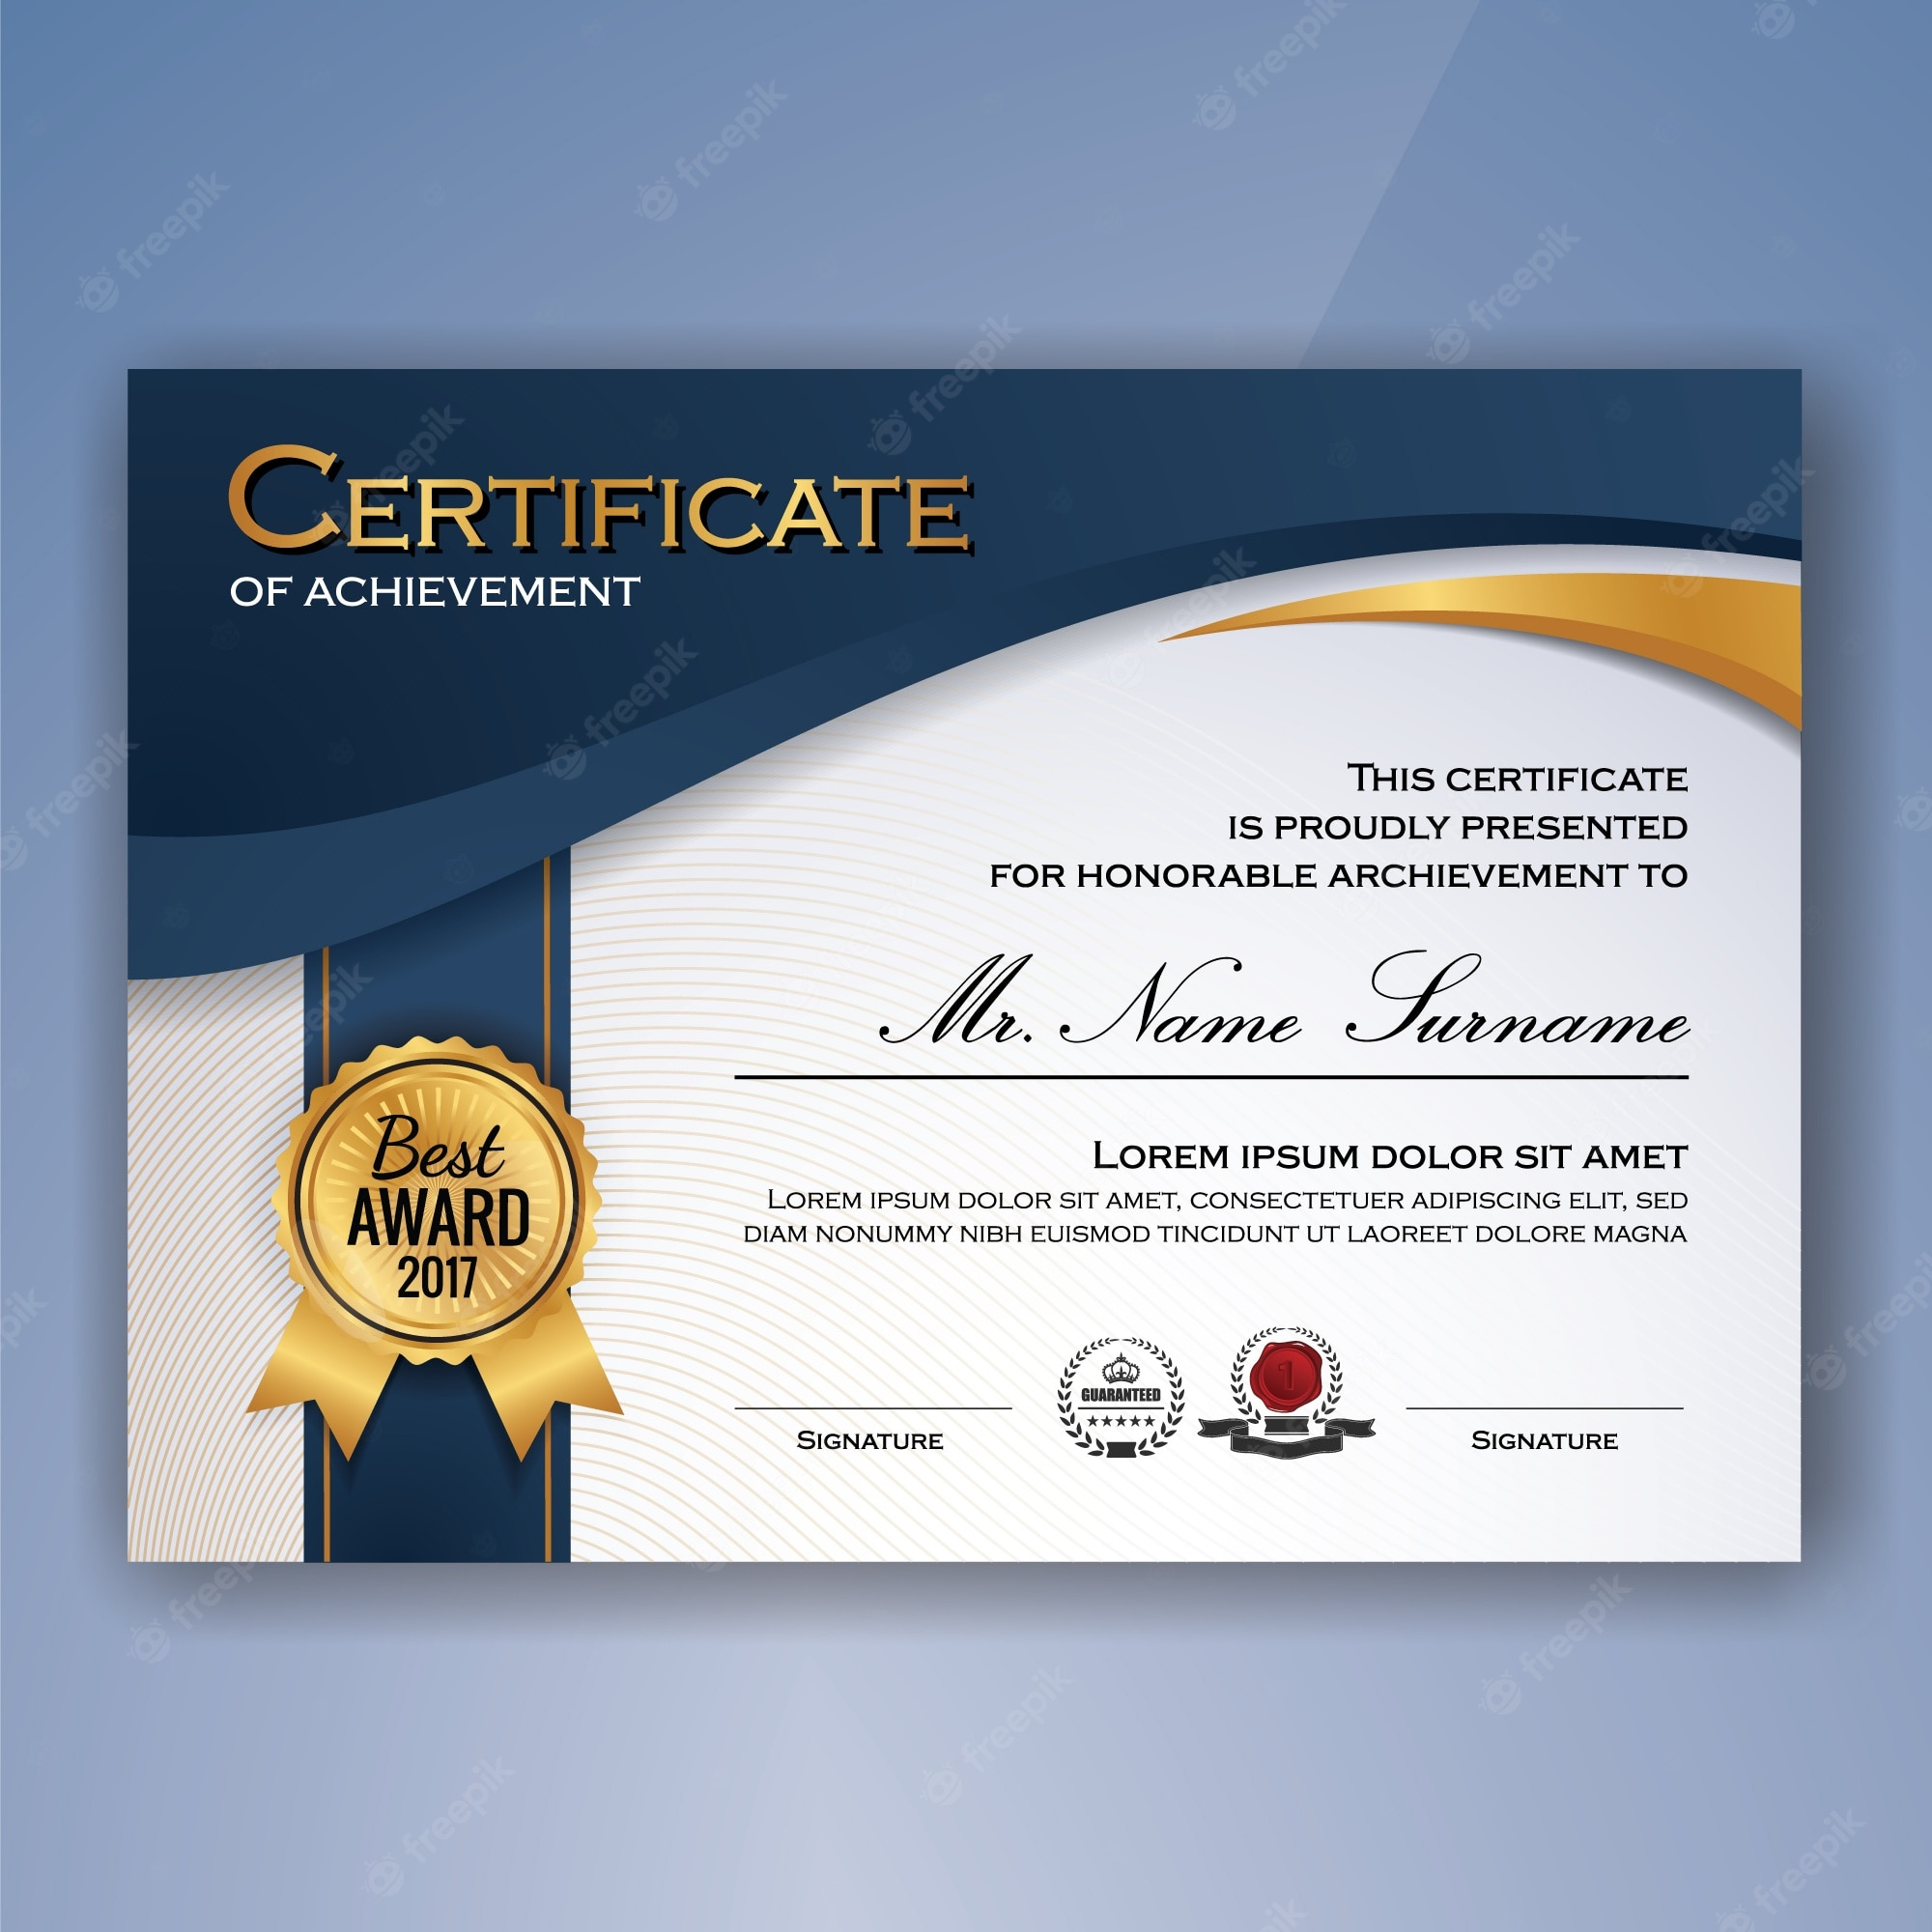 Free Vector  Certificate Of Achievement Template With Regard To Template For Certificate Of Award